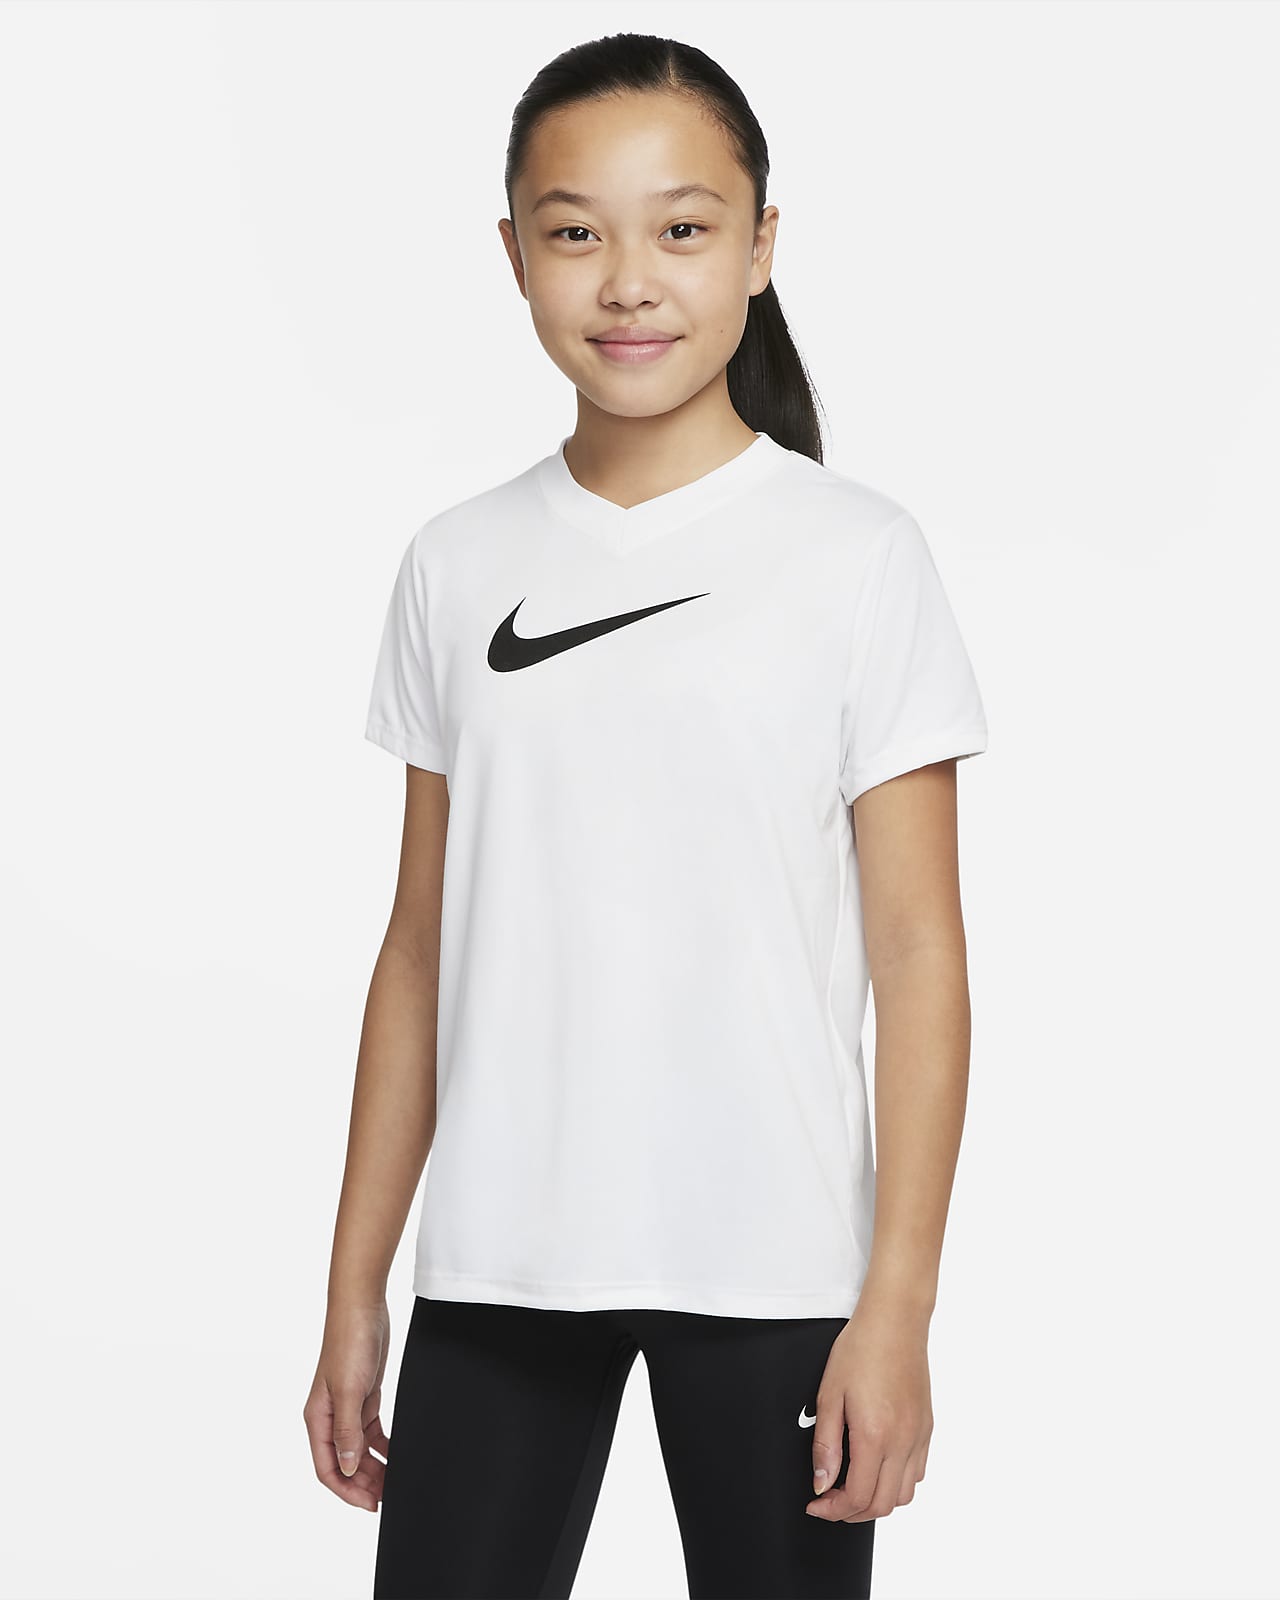 refugiados sol arbusto Nike Dri-FIT Big Kids' Swoosh Training T-Shirt. Nike.com